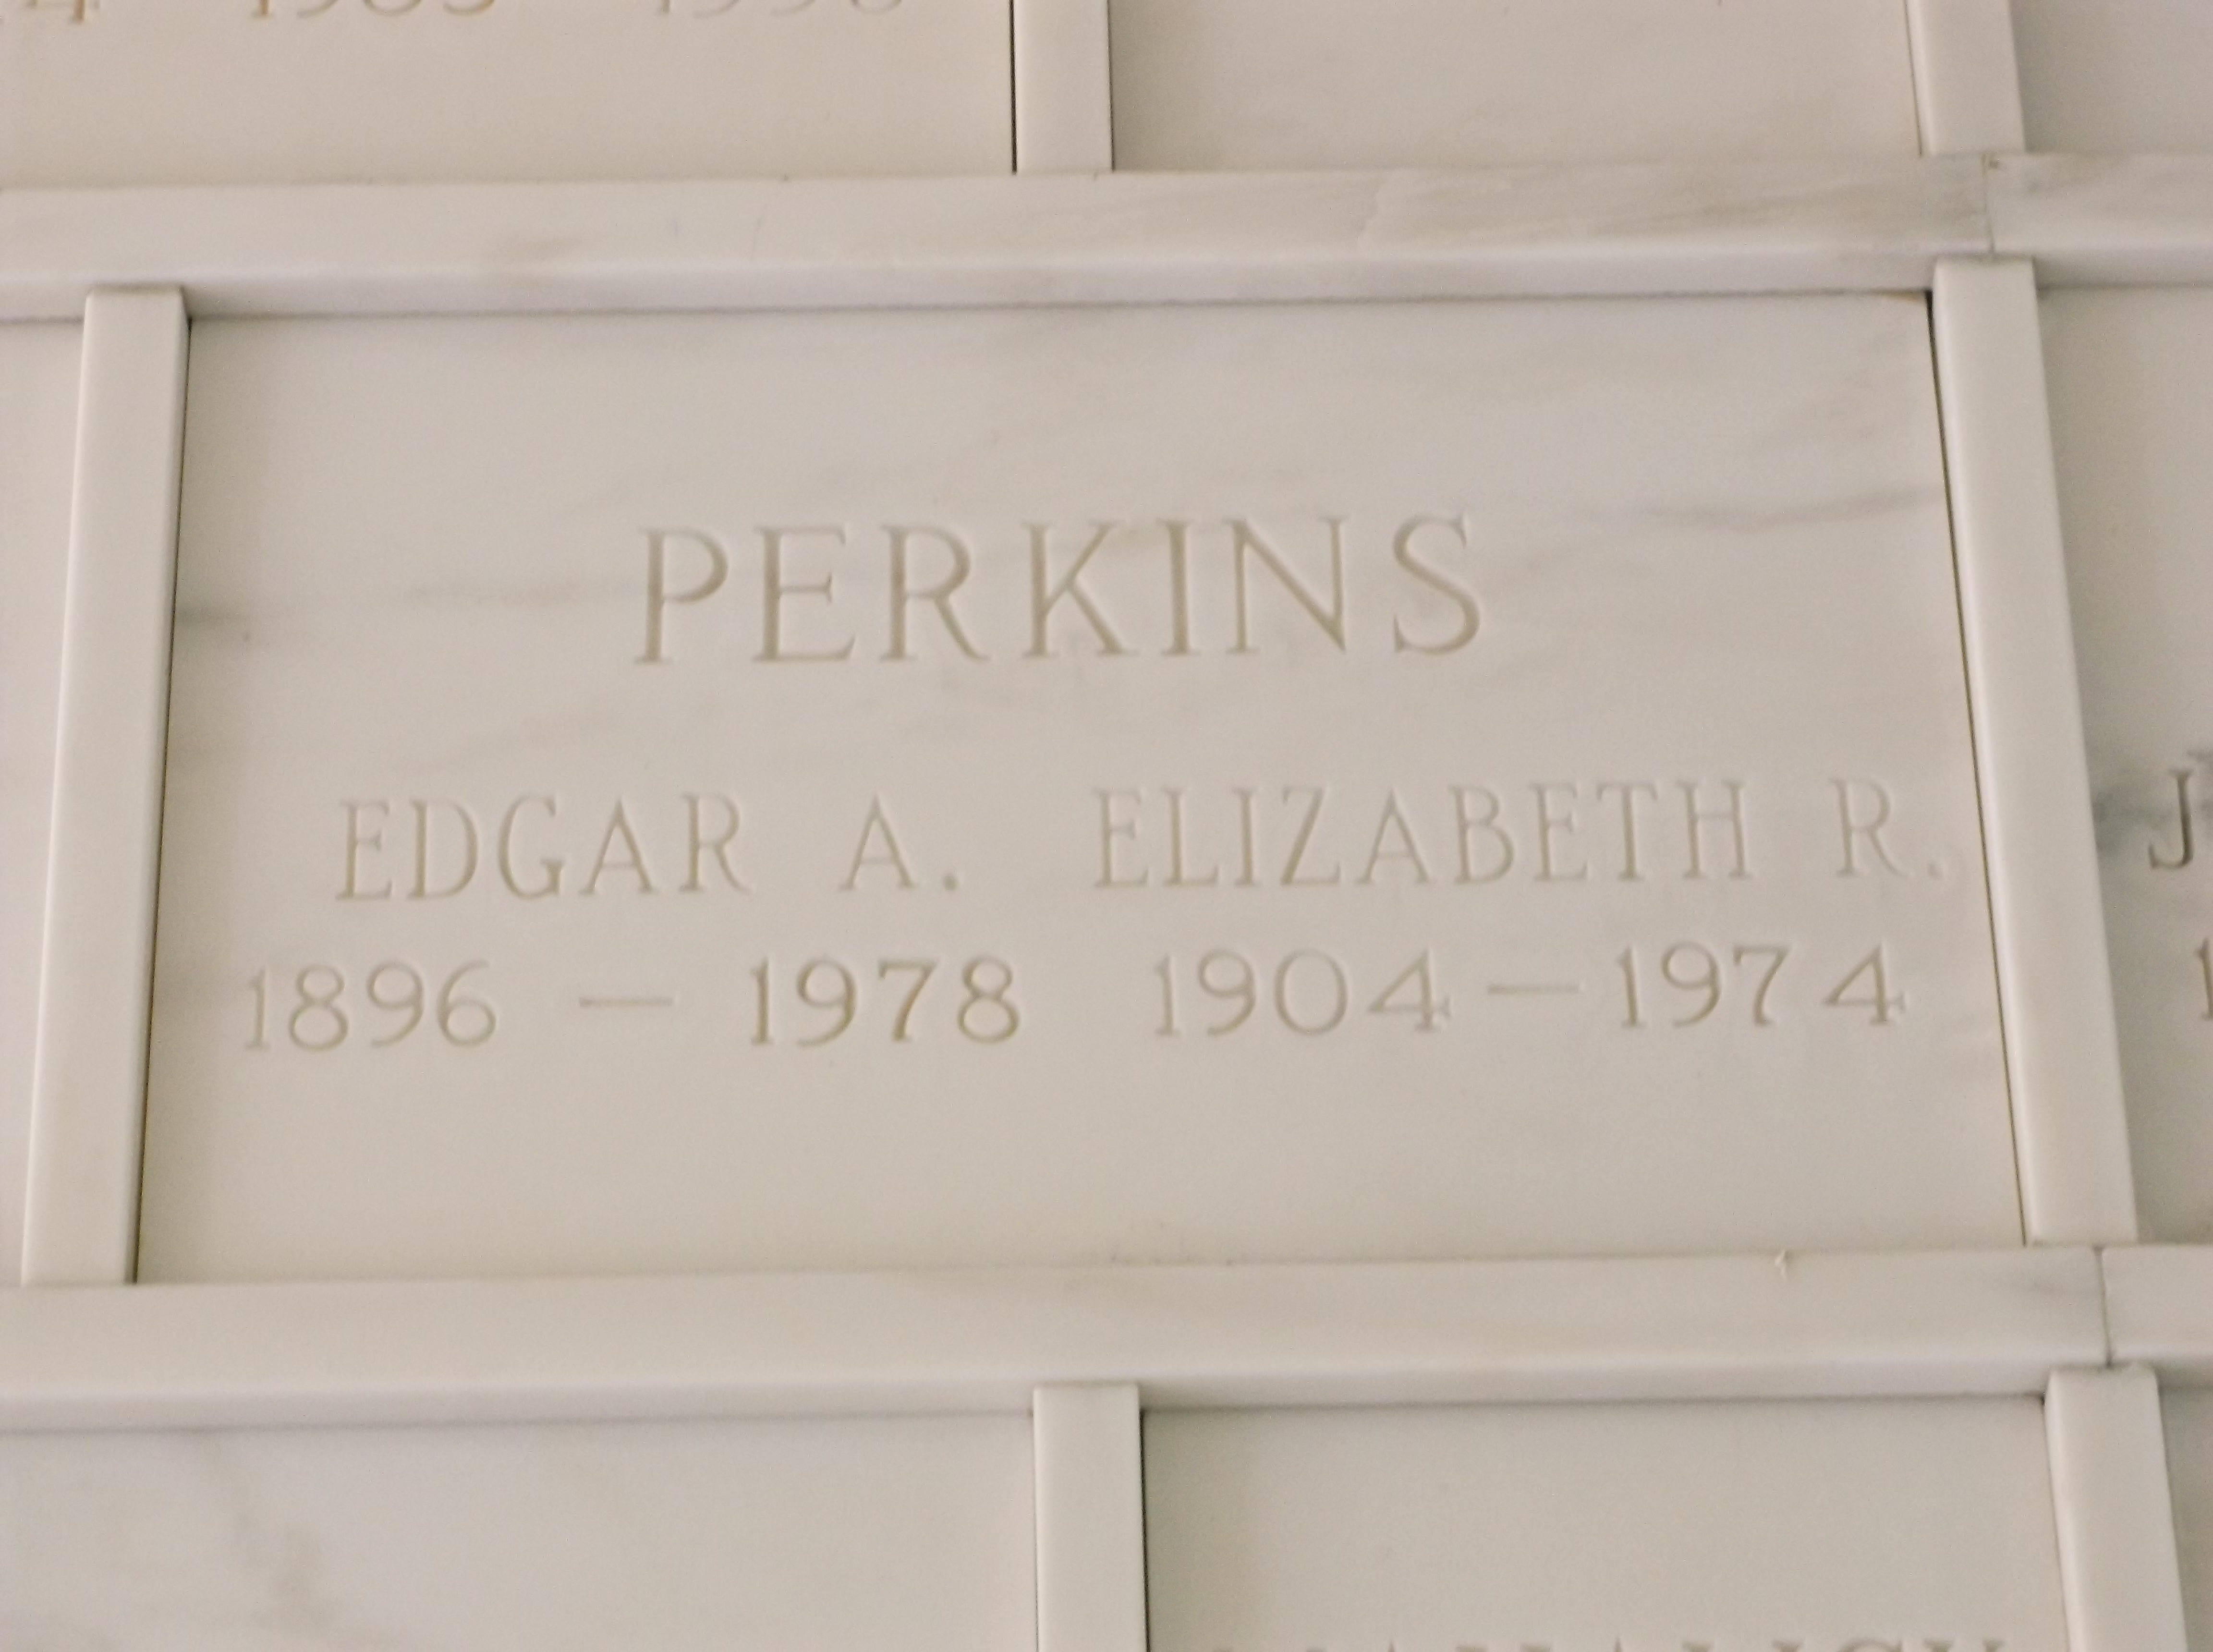 Elizabeth R Perkins